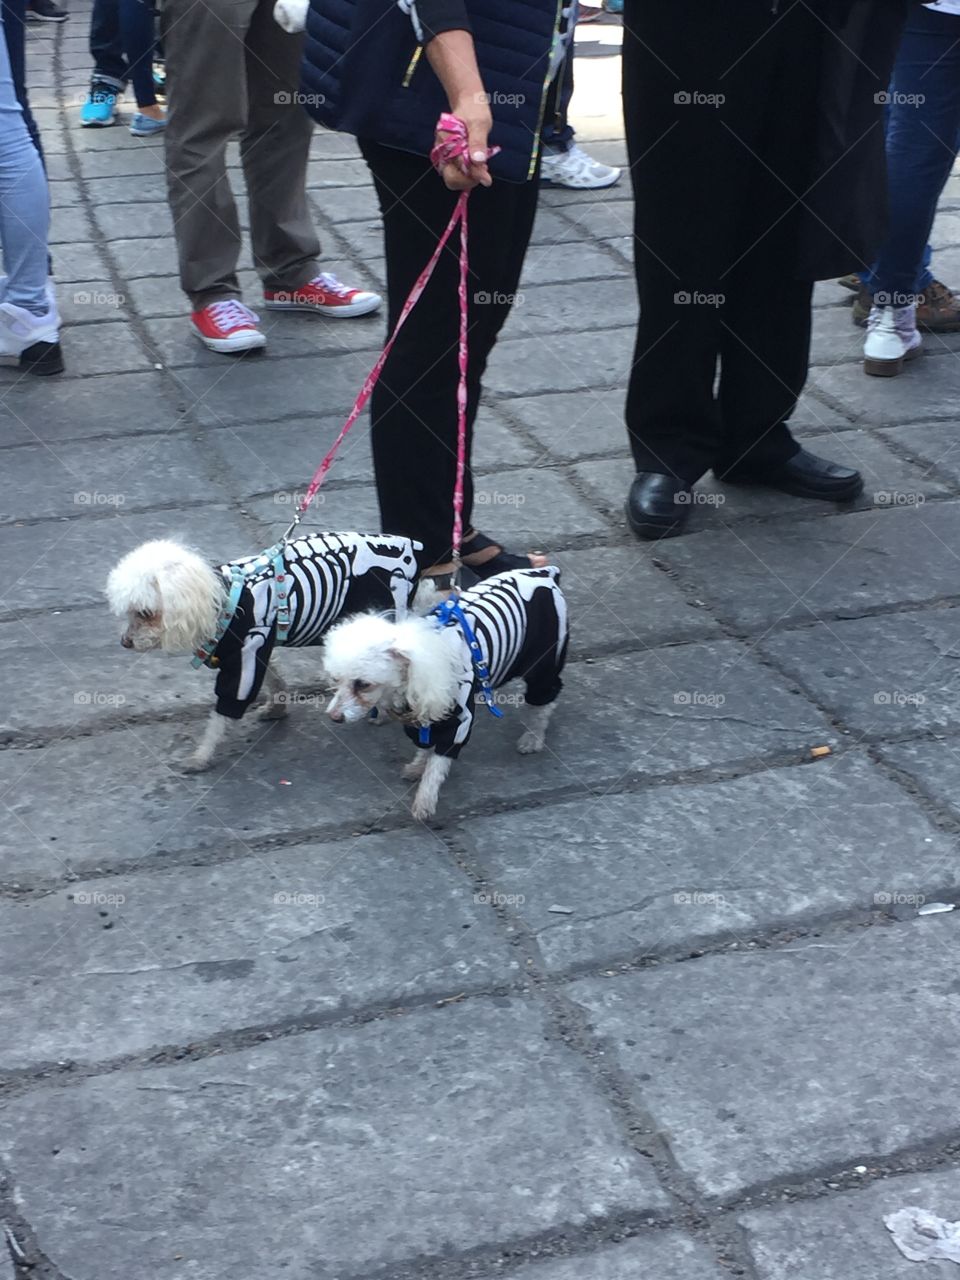 Two poodles wearing skeleton costumes